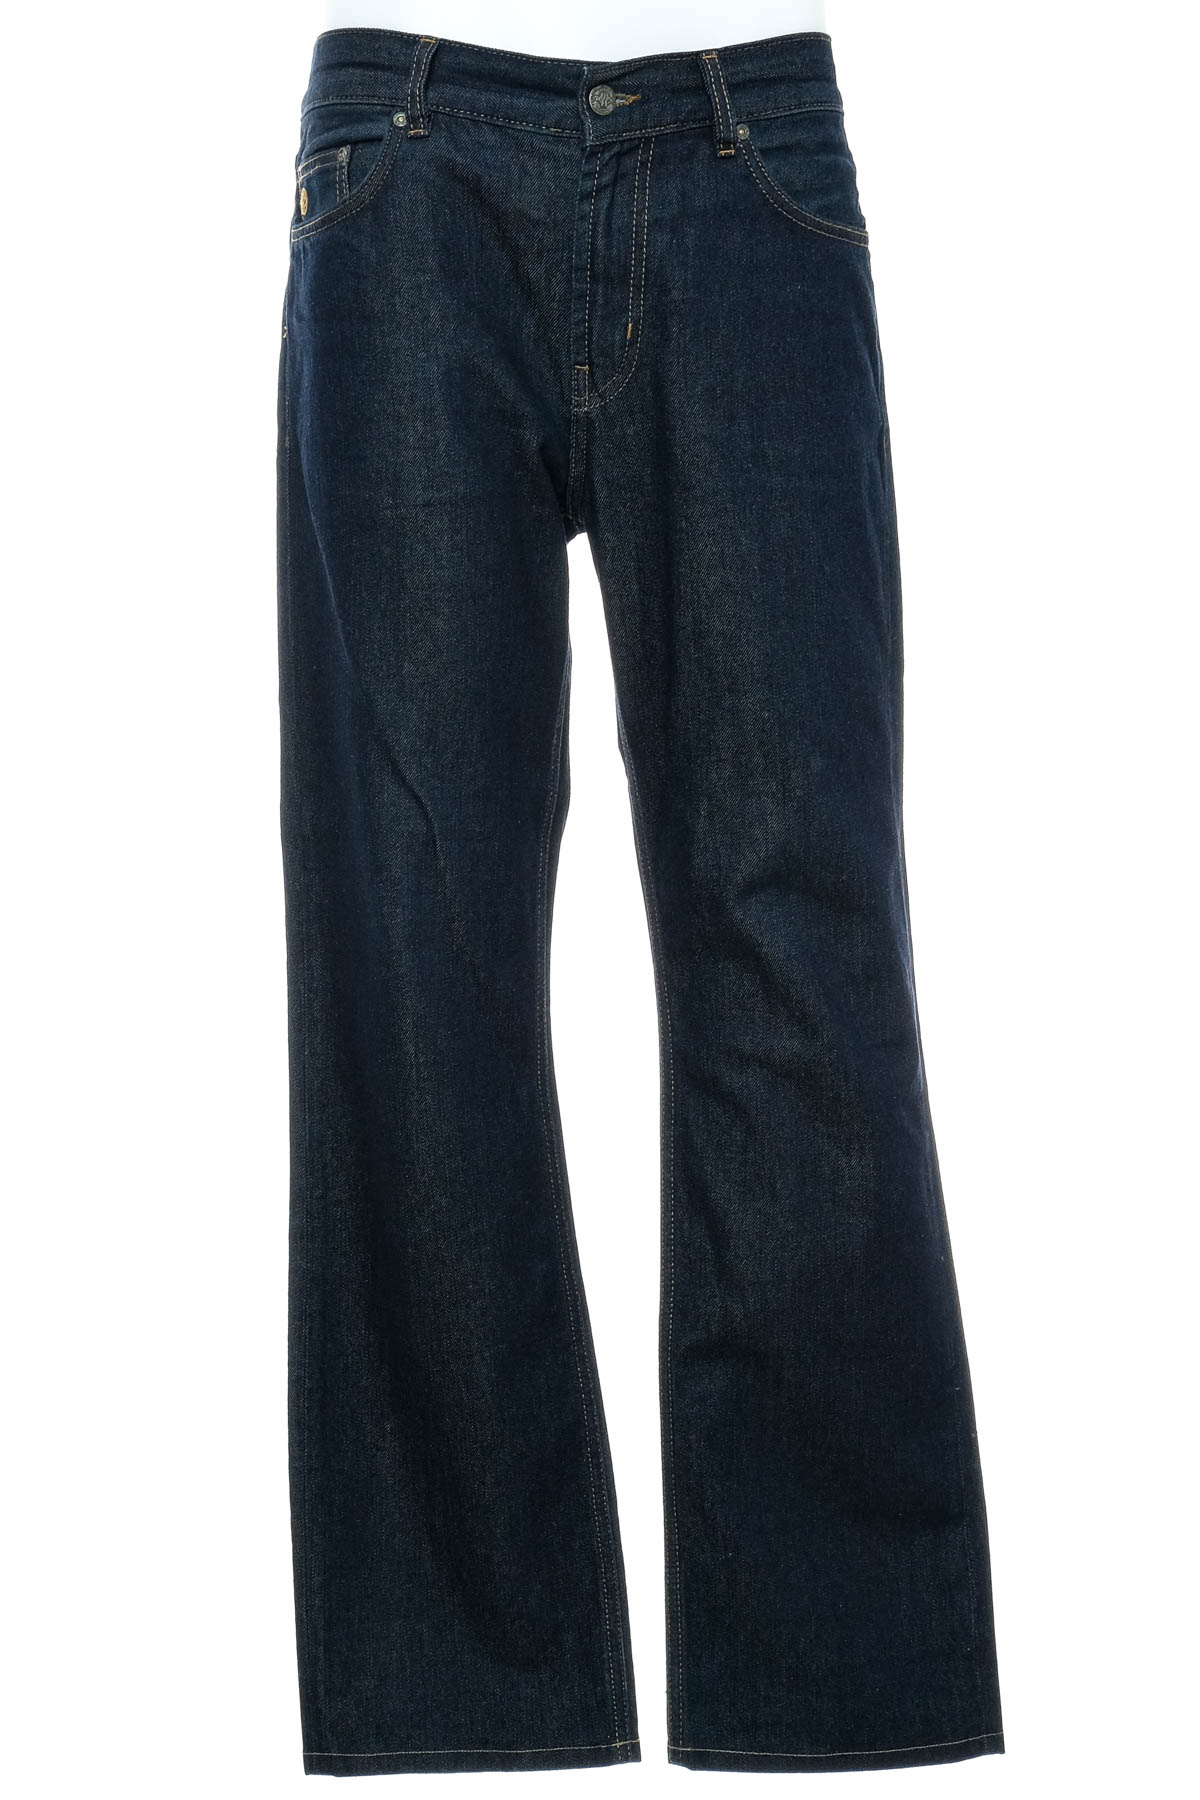 Men's jeans - MCNEAL - 0